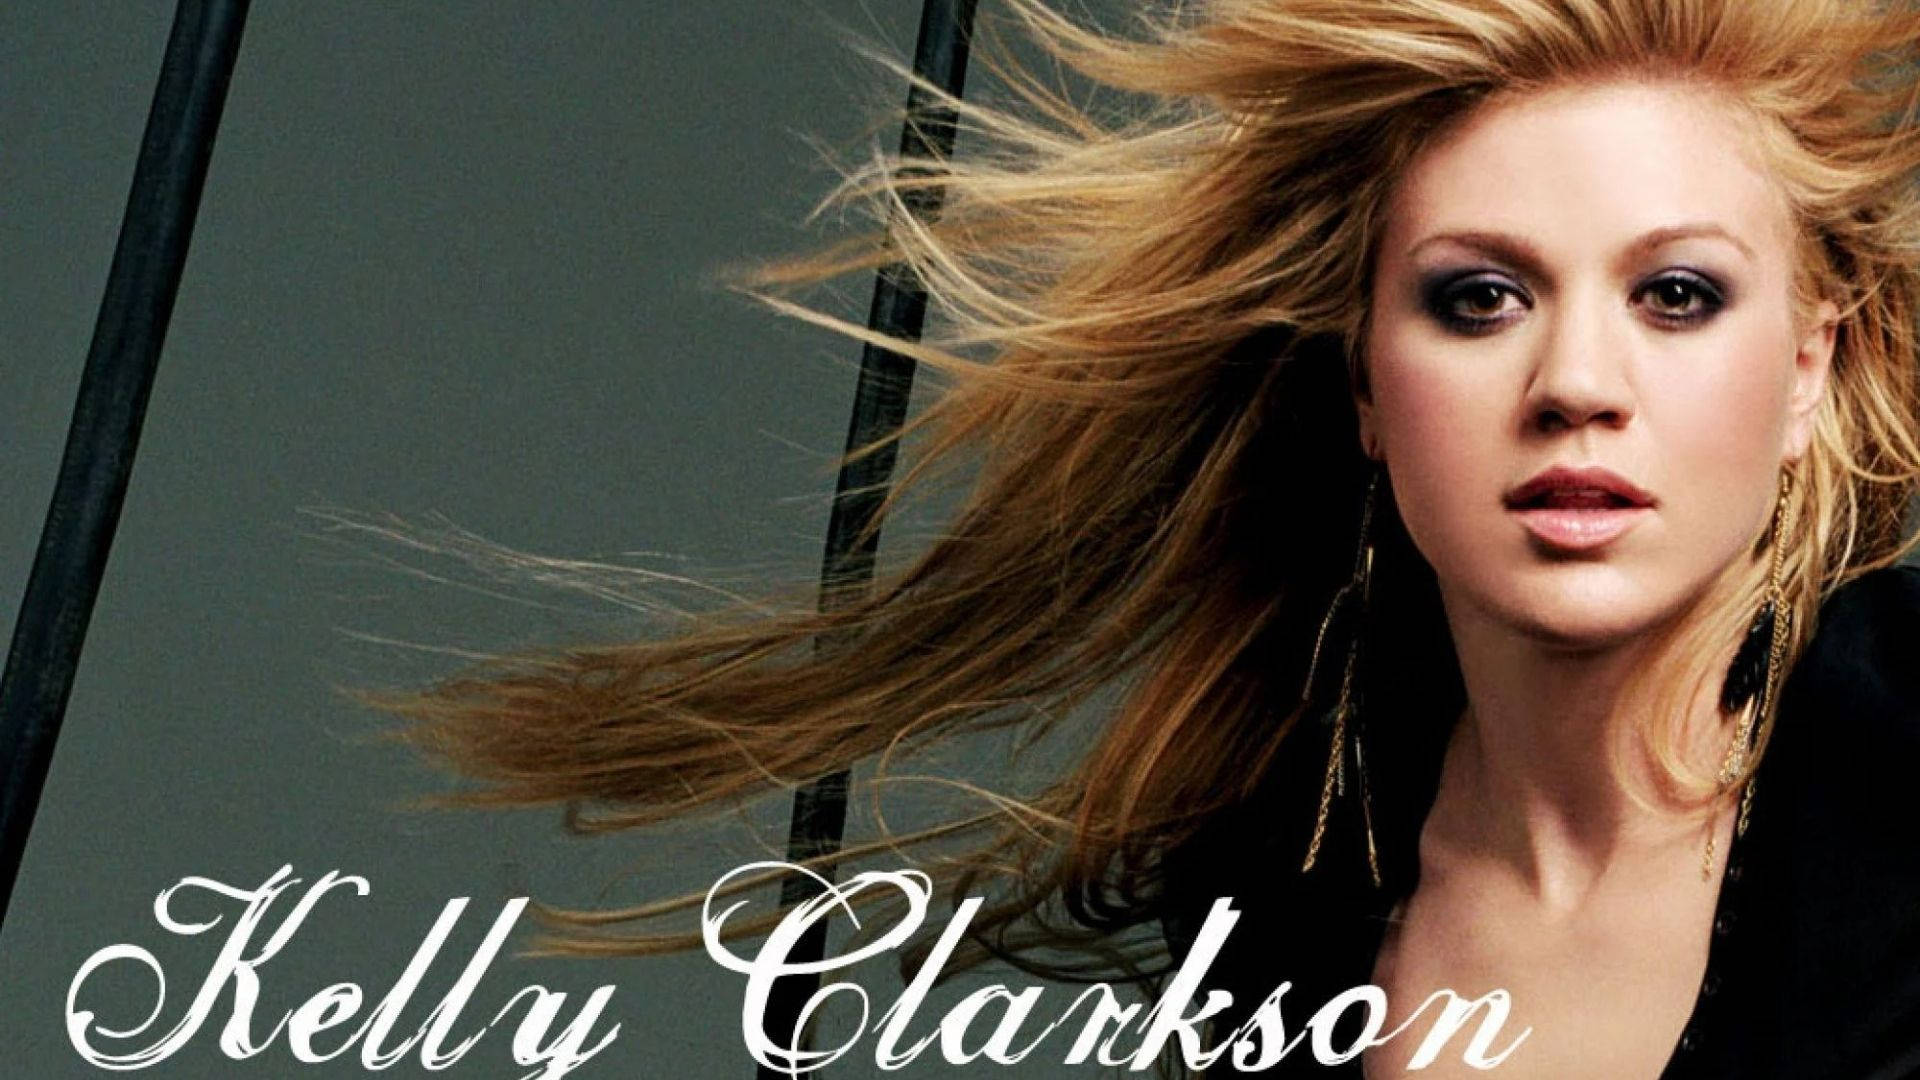 Kelly Clarkson Appealing Look Background